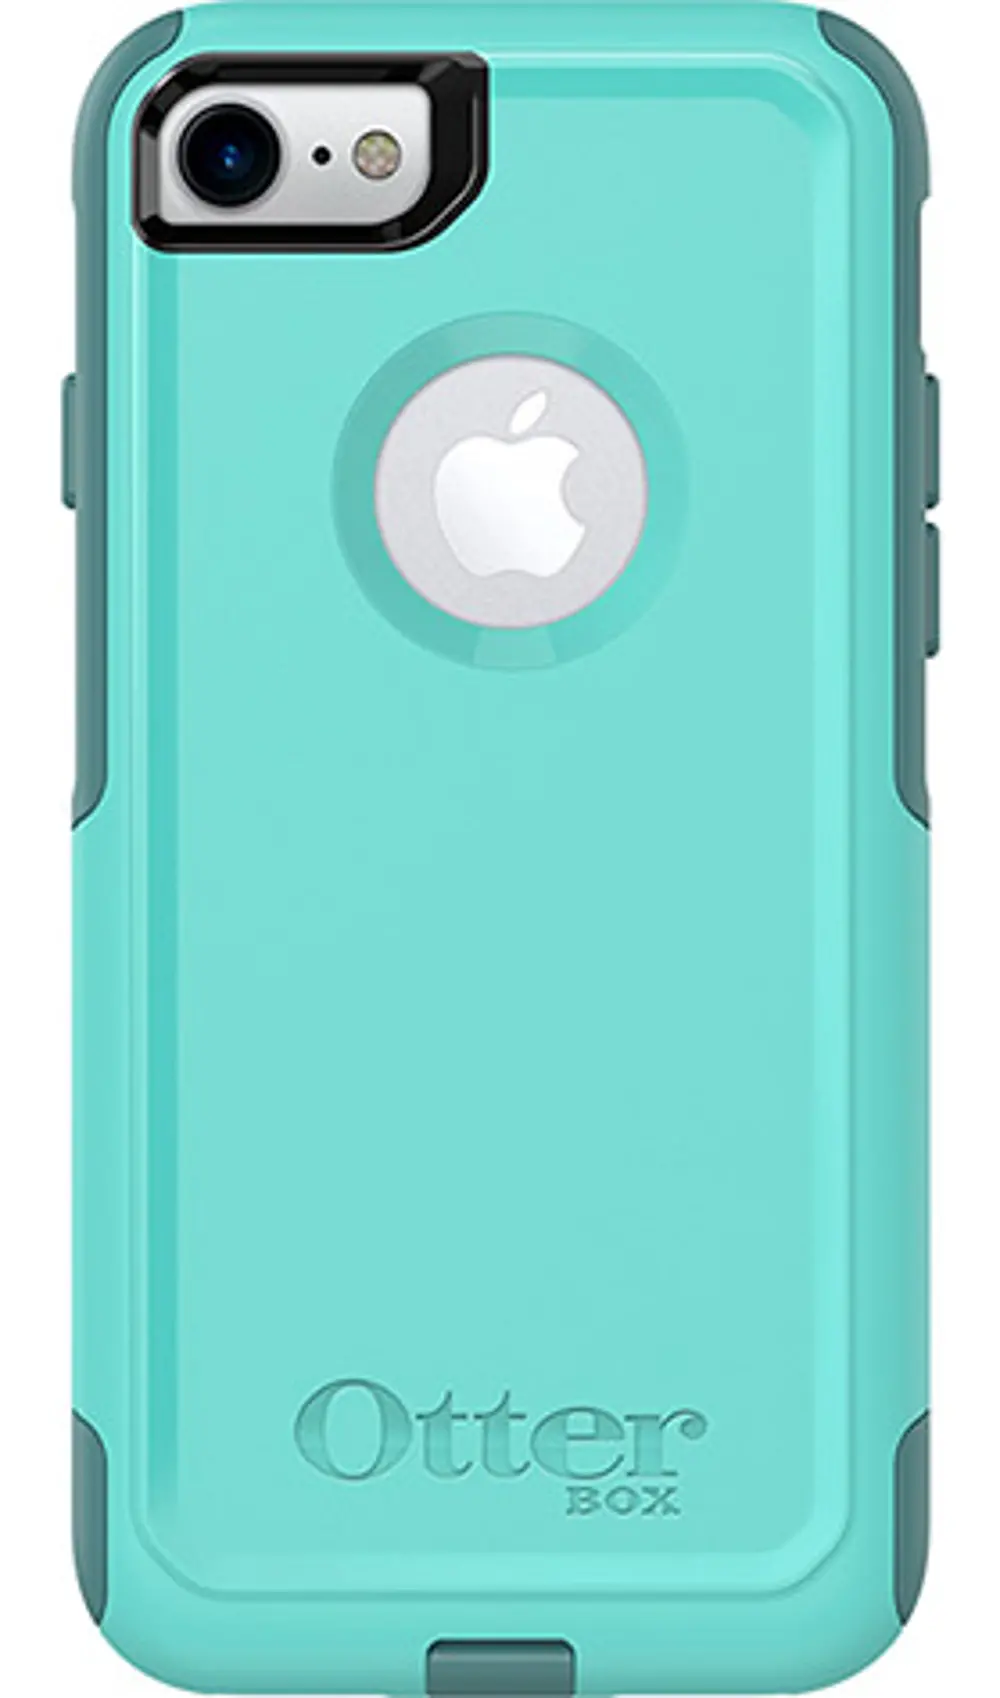 77-53901 OtterBox iPhone 7 Commuter Series Case - Aqua Mint-1